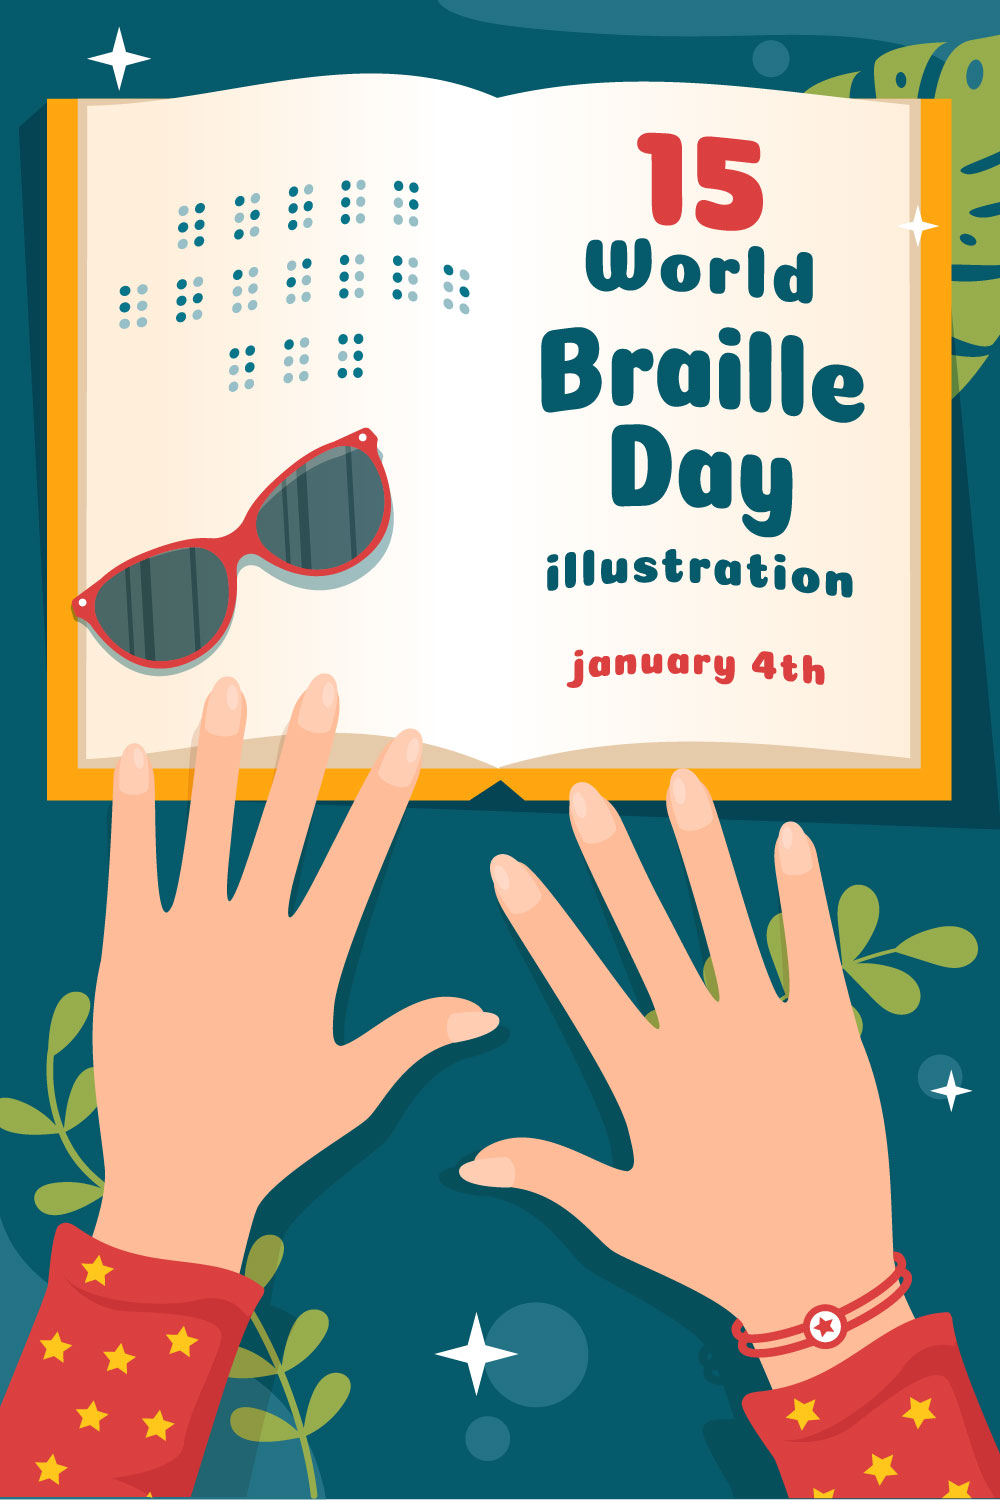 World Braille Day Illustration pinterest image.